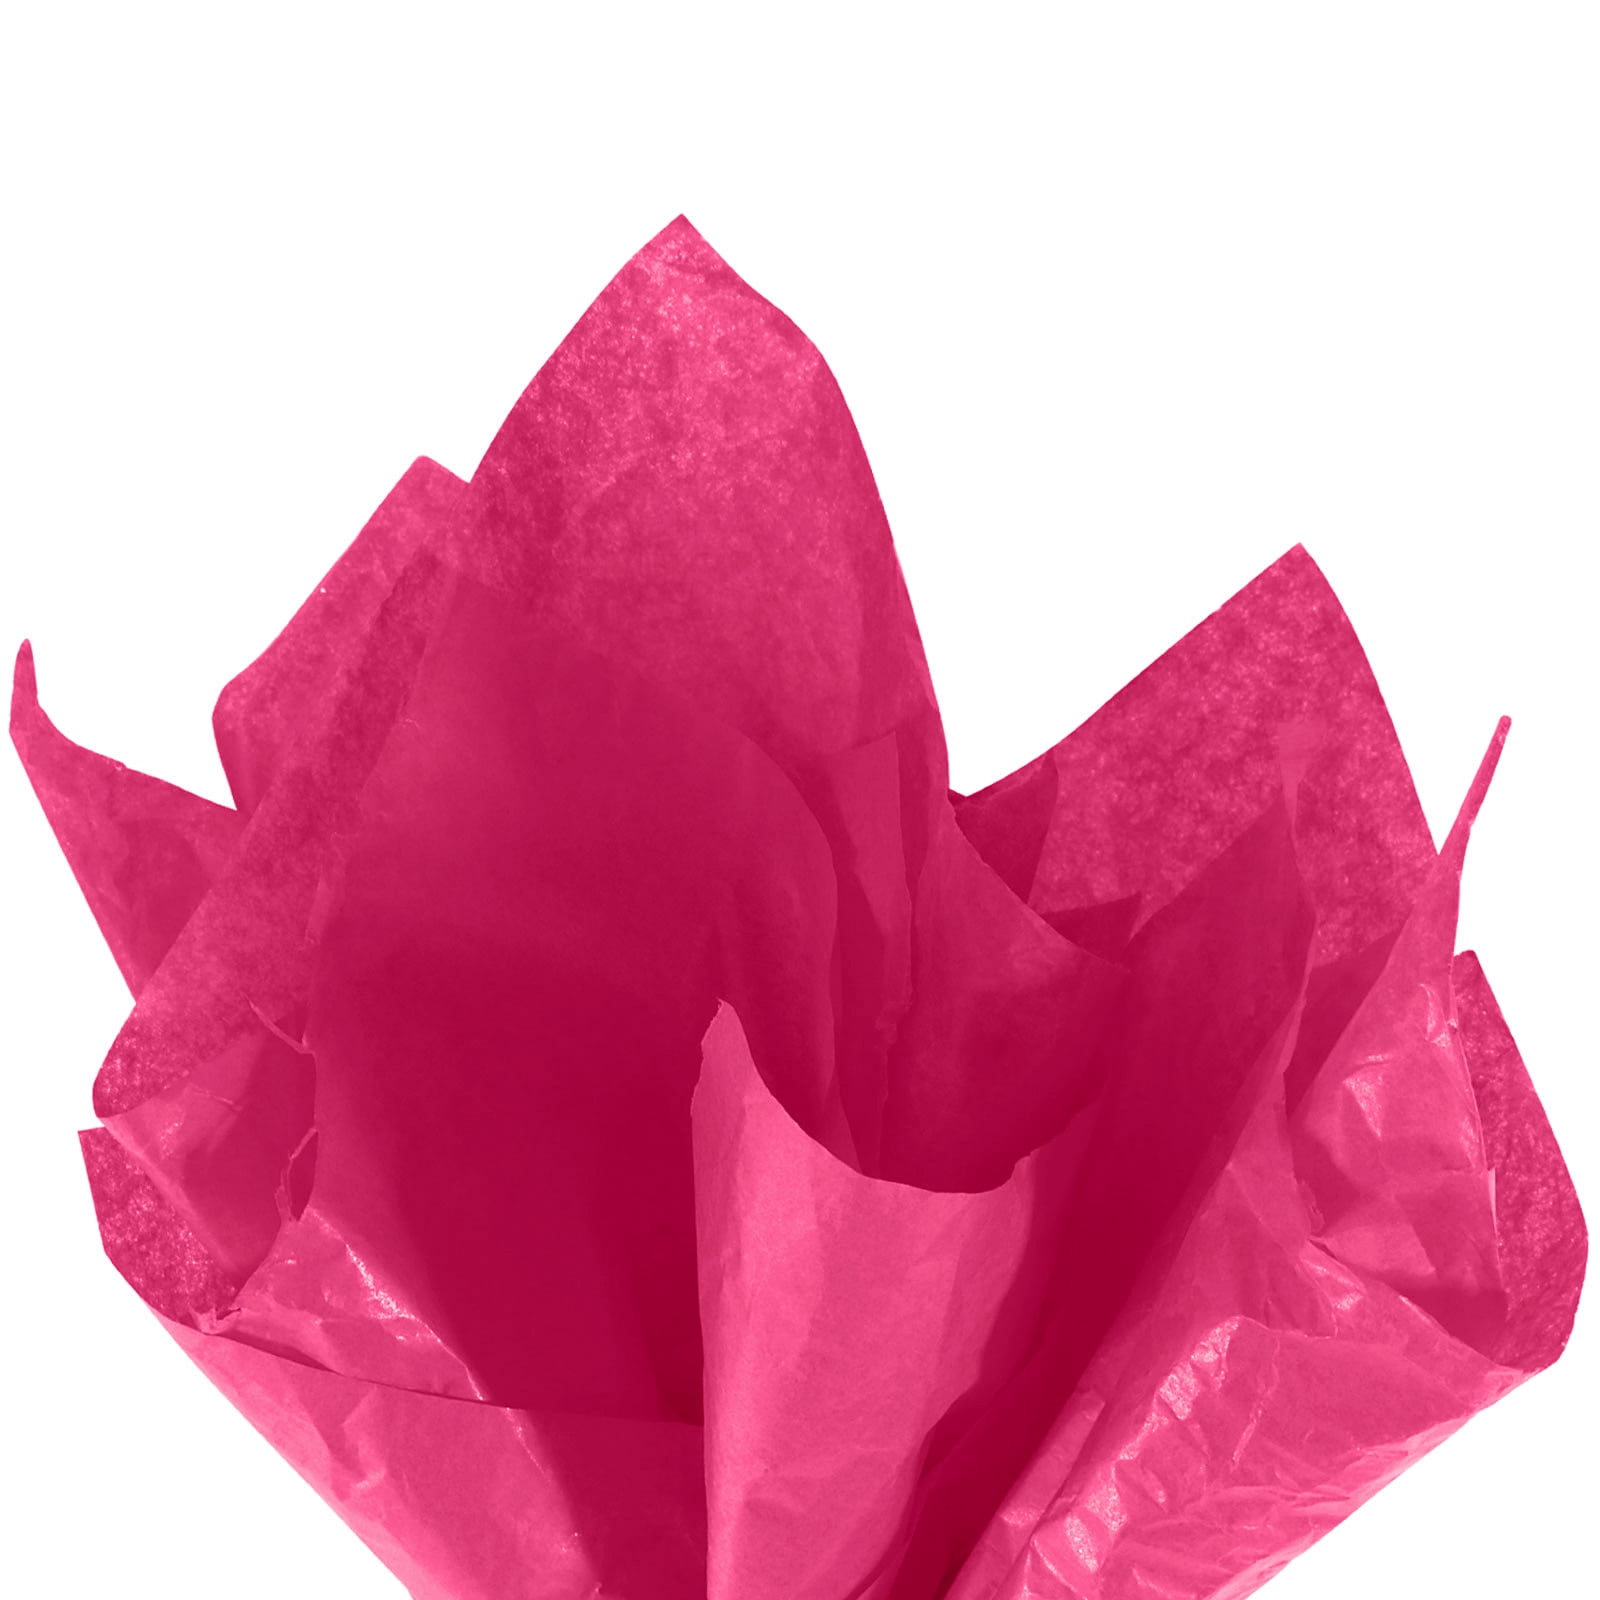 10pcs/bag 50x66cm Gift Packaging Craft Tissue Paper Flower